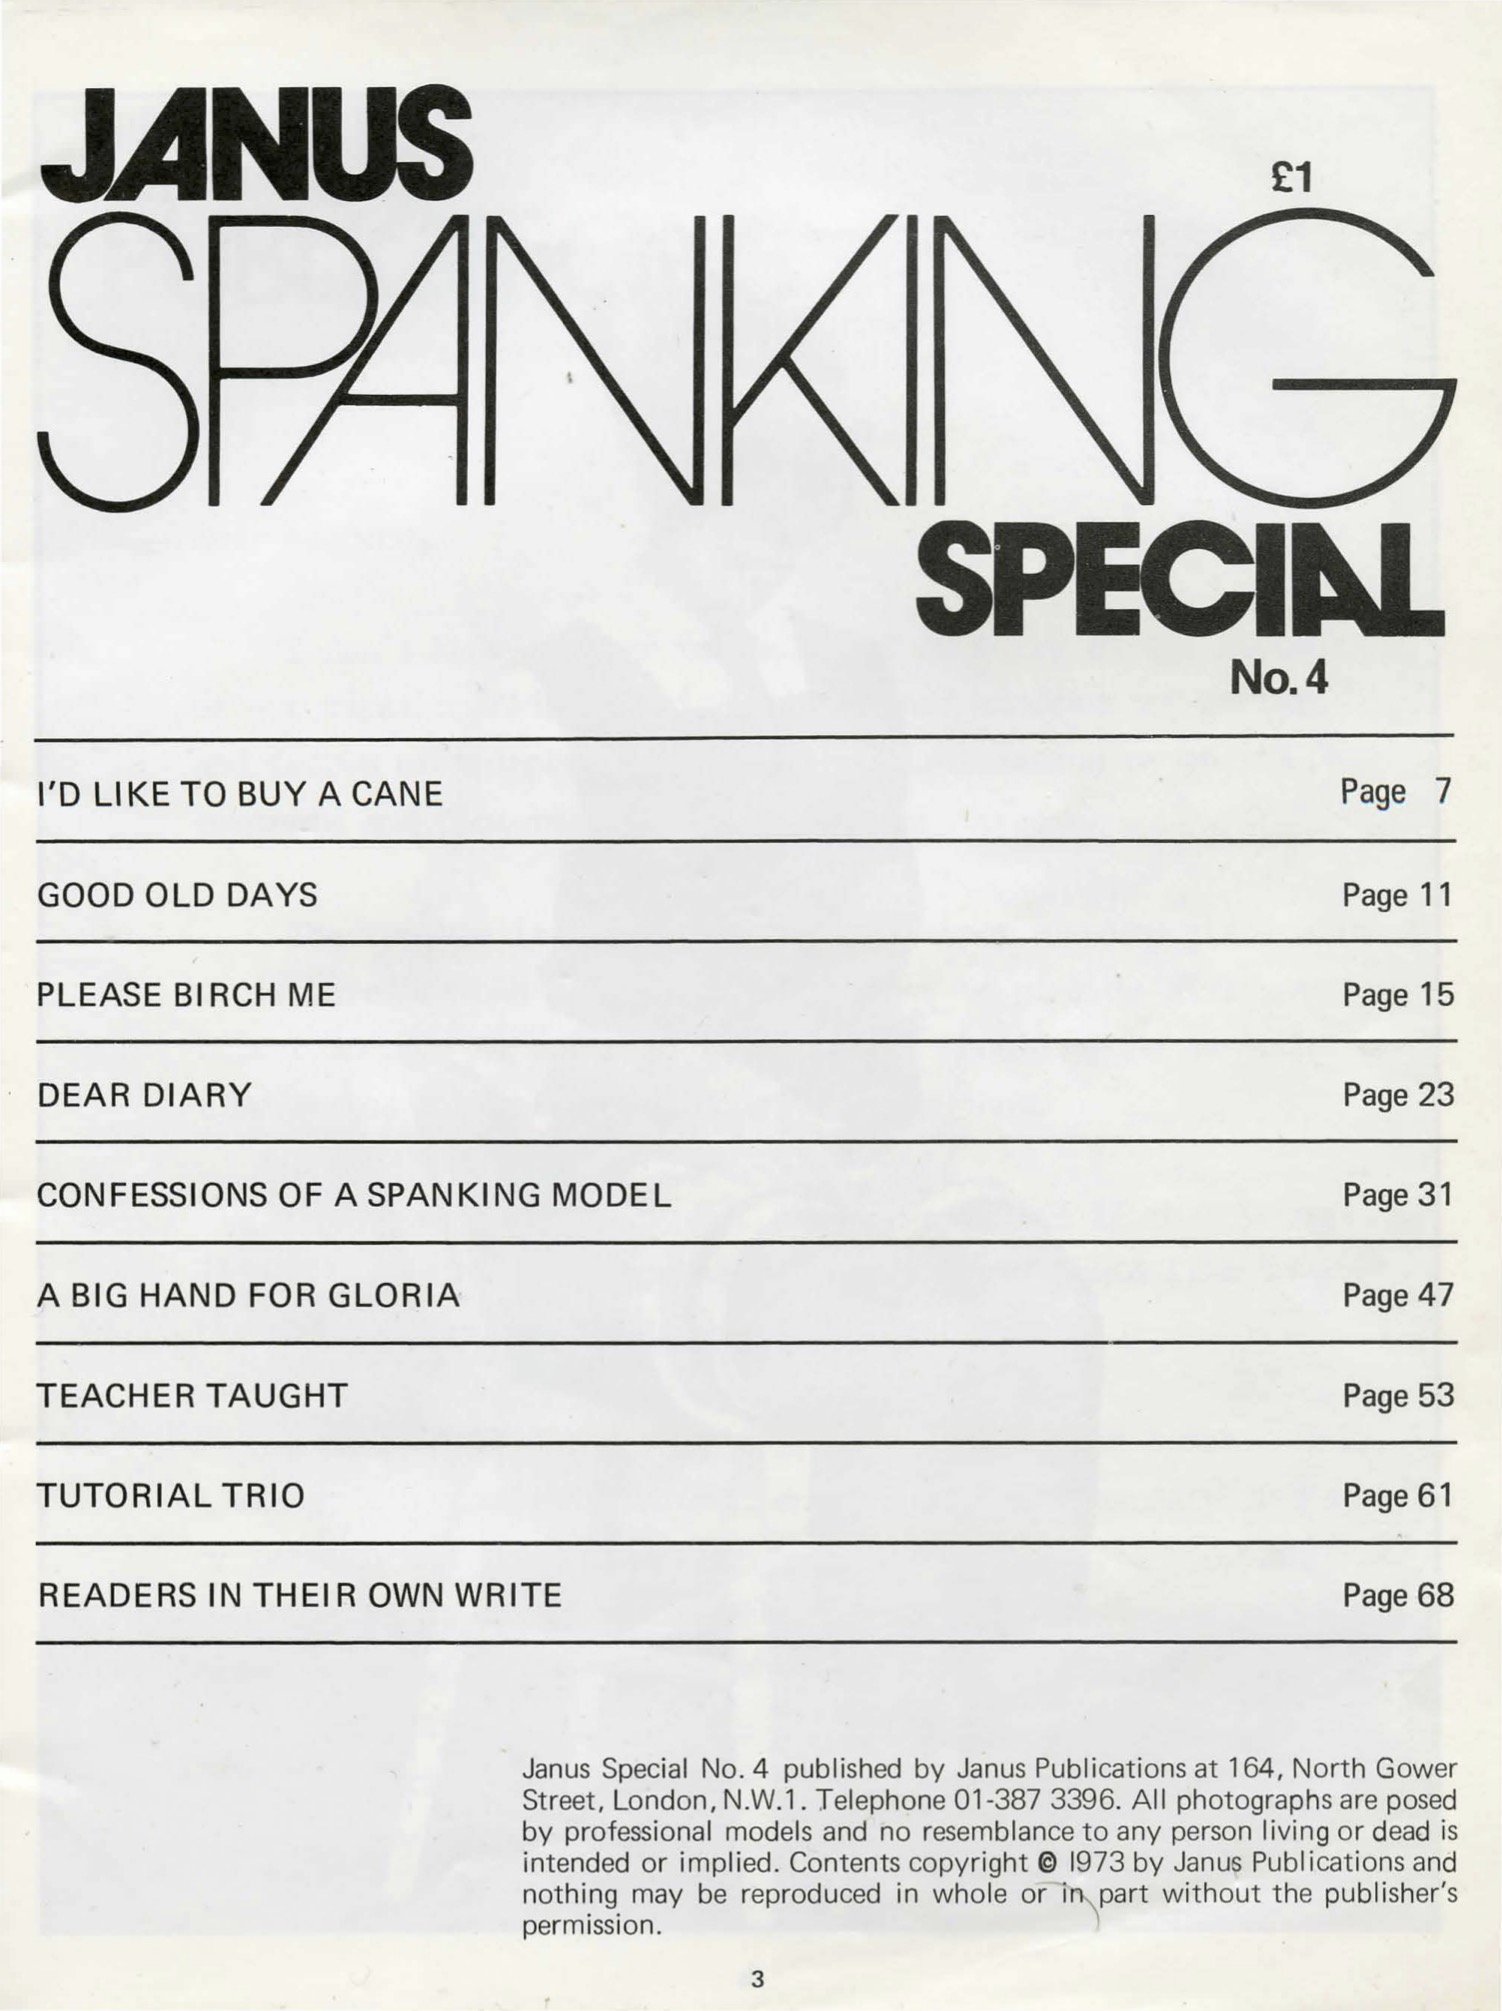 Janus Special Spanking Issue, No. 4_3.jpg